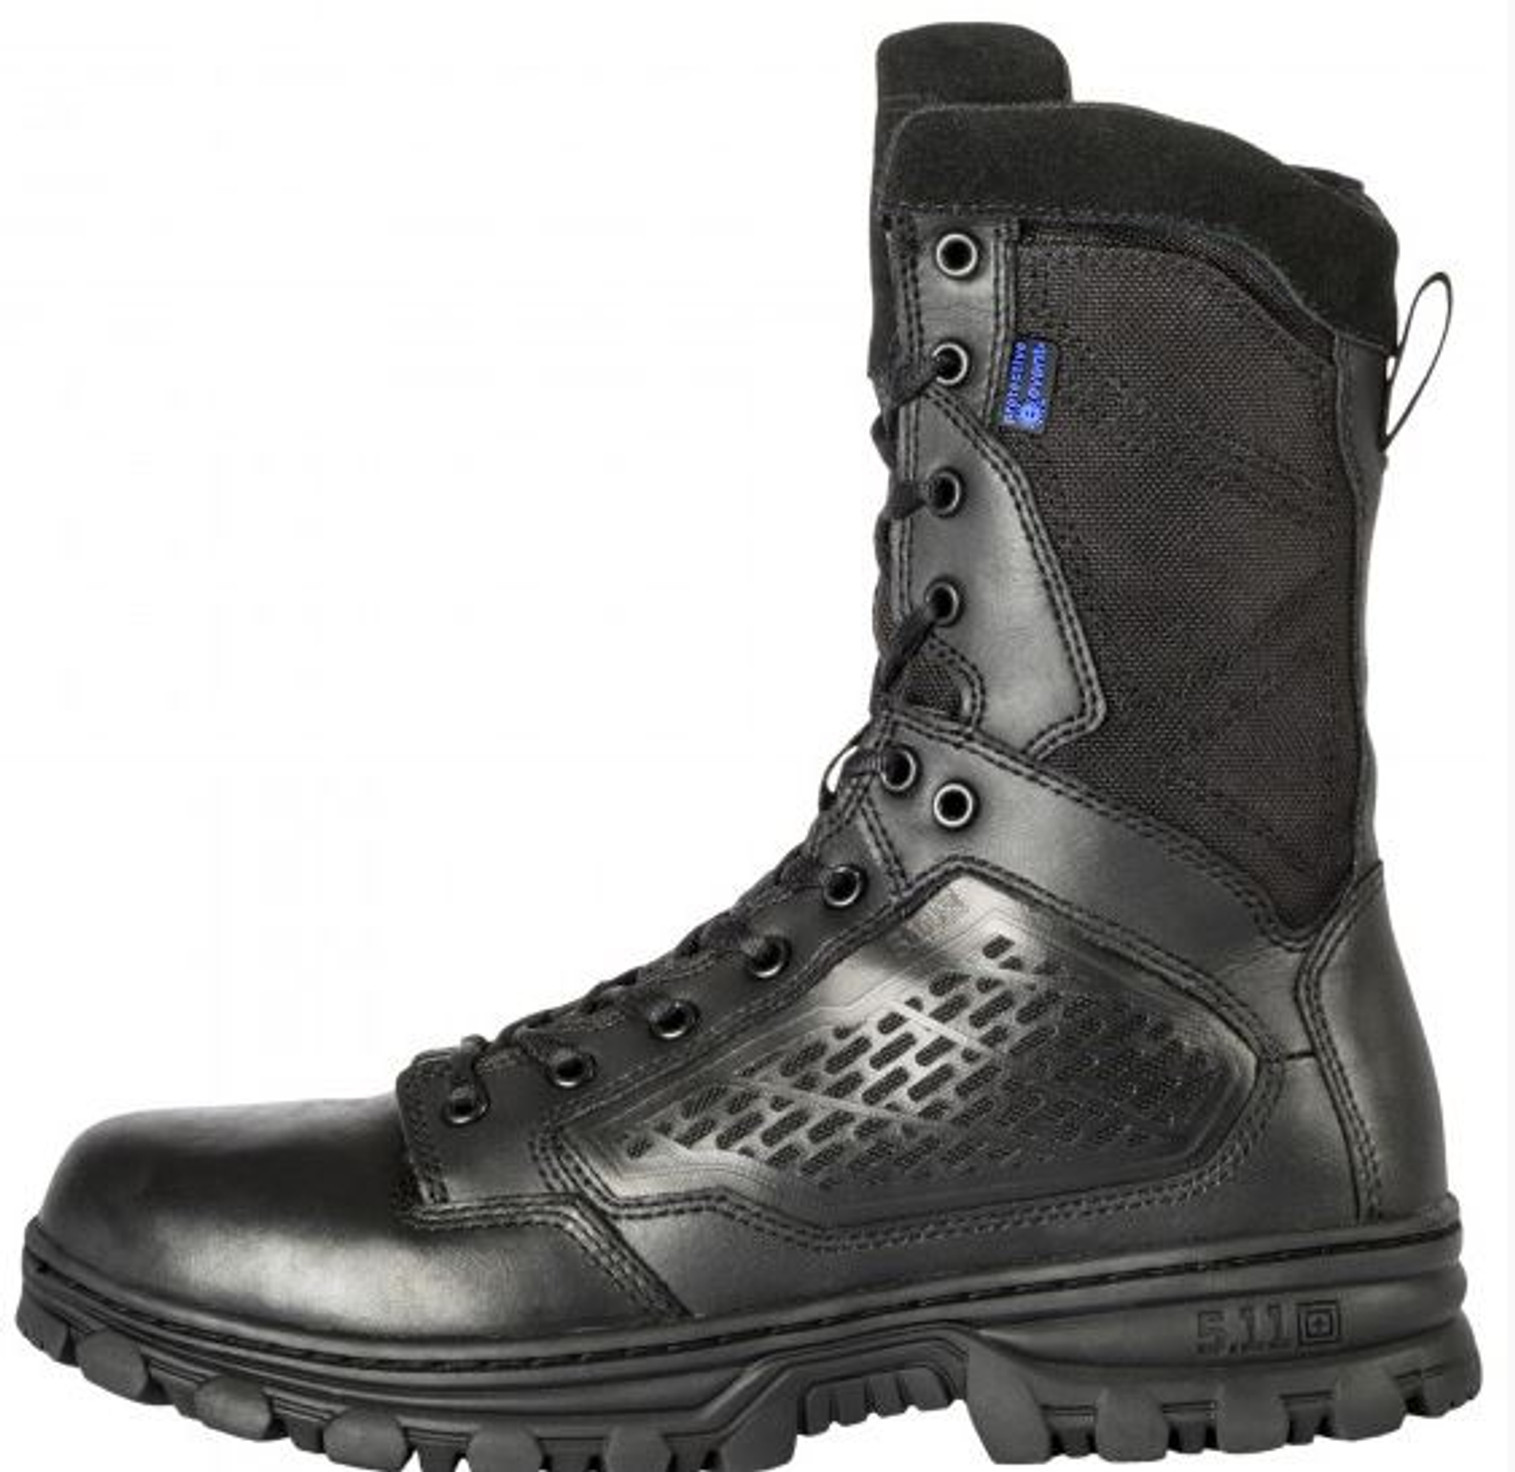 5.11 EVO 8" Waterproof Boot with Sidezip - Black